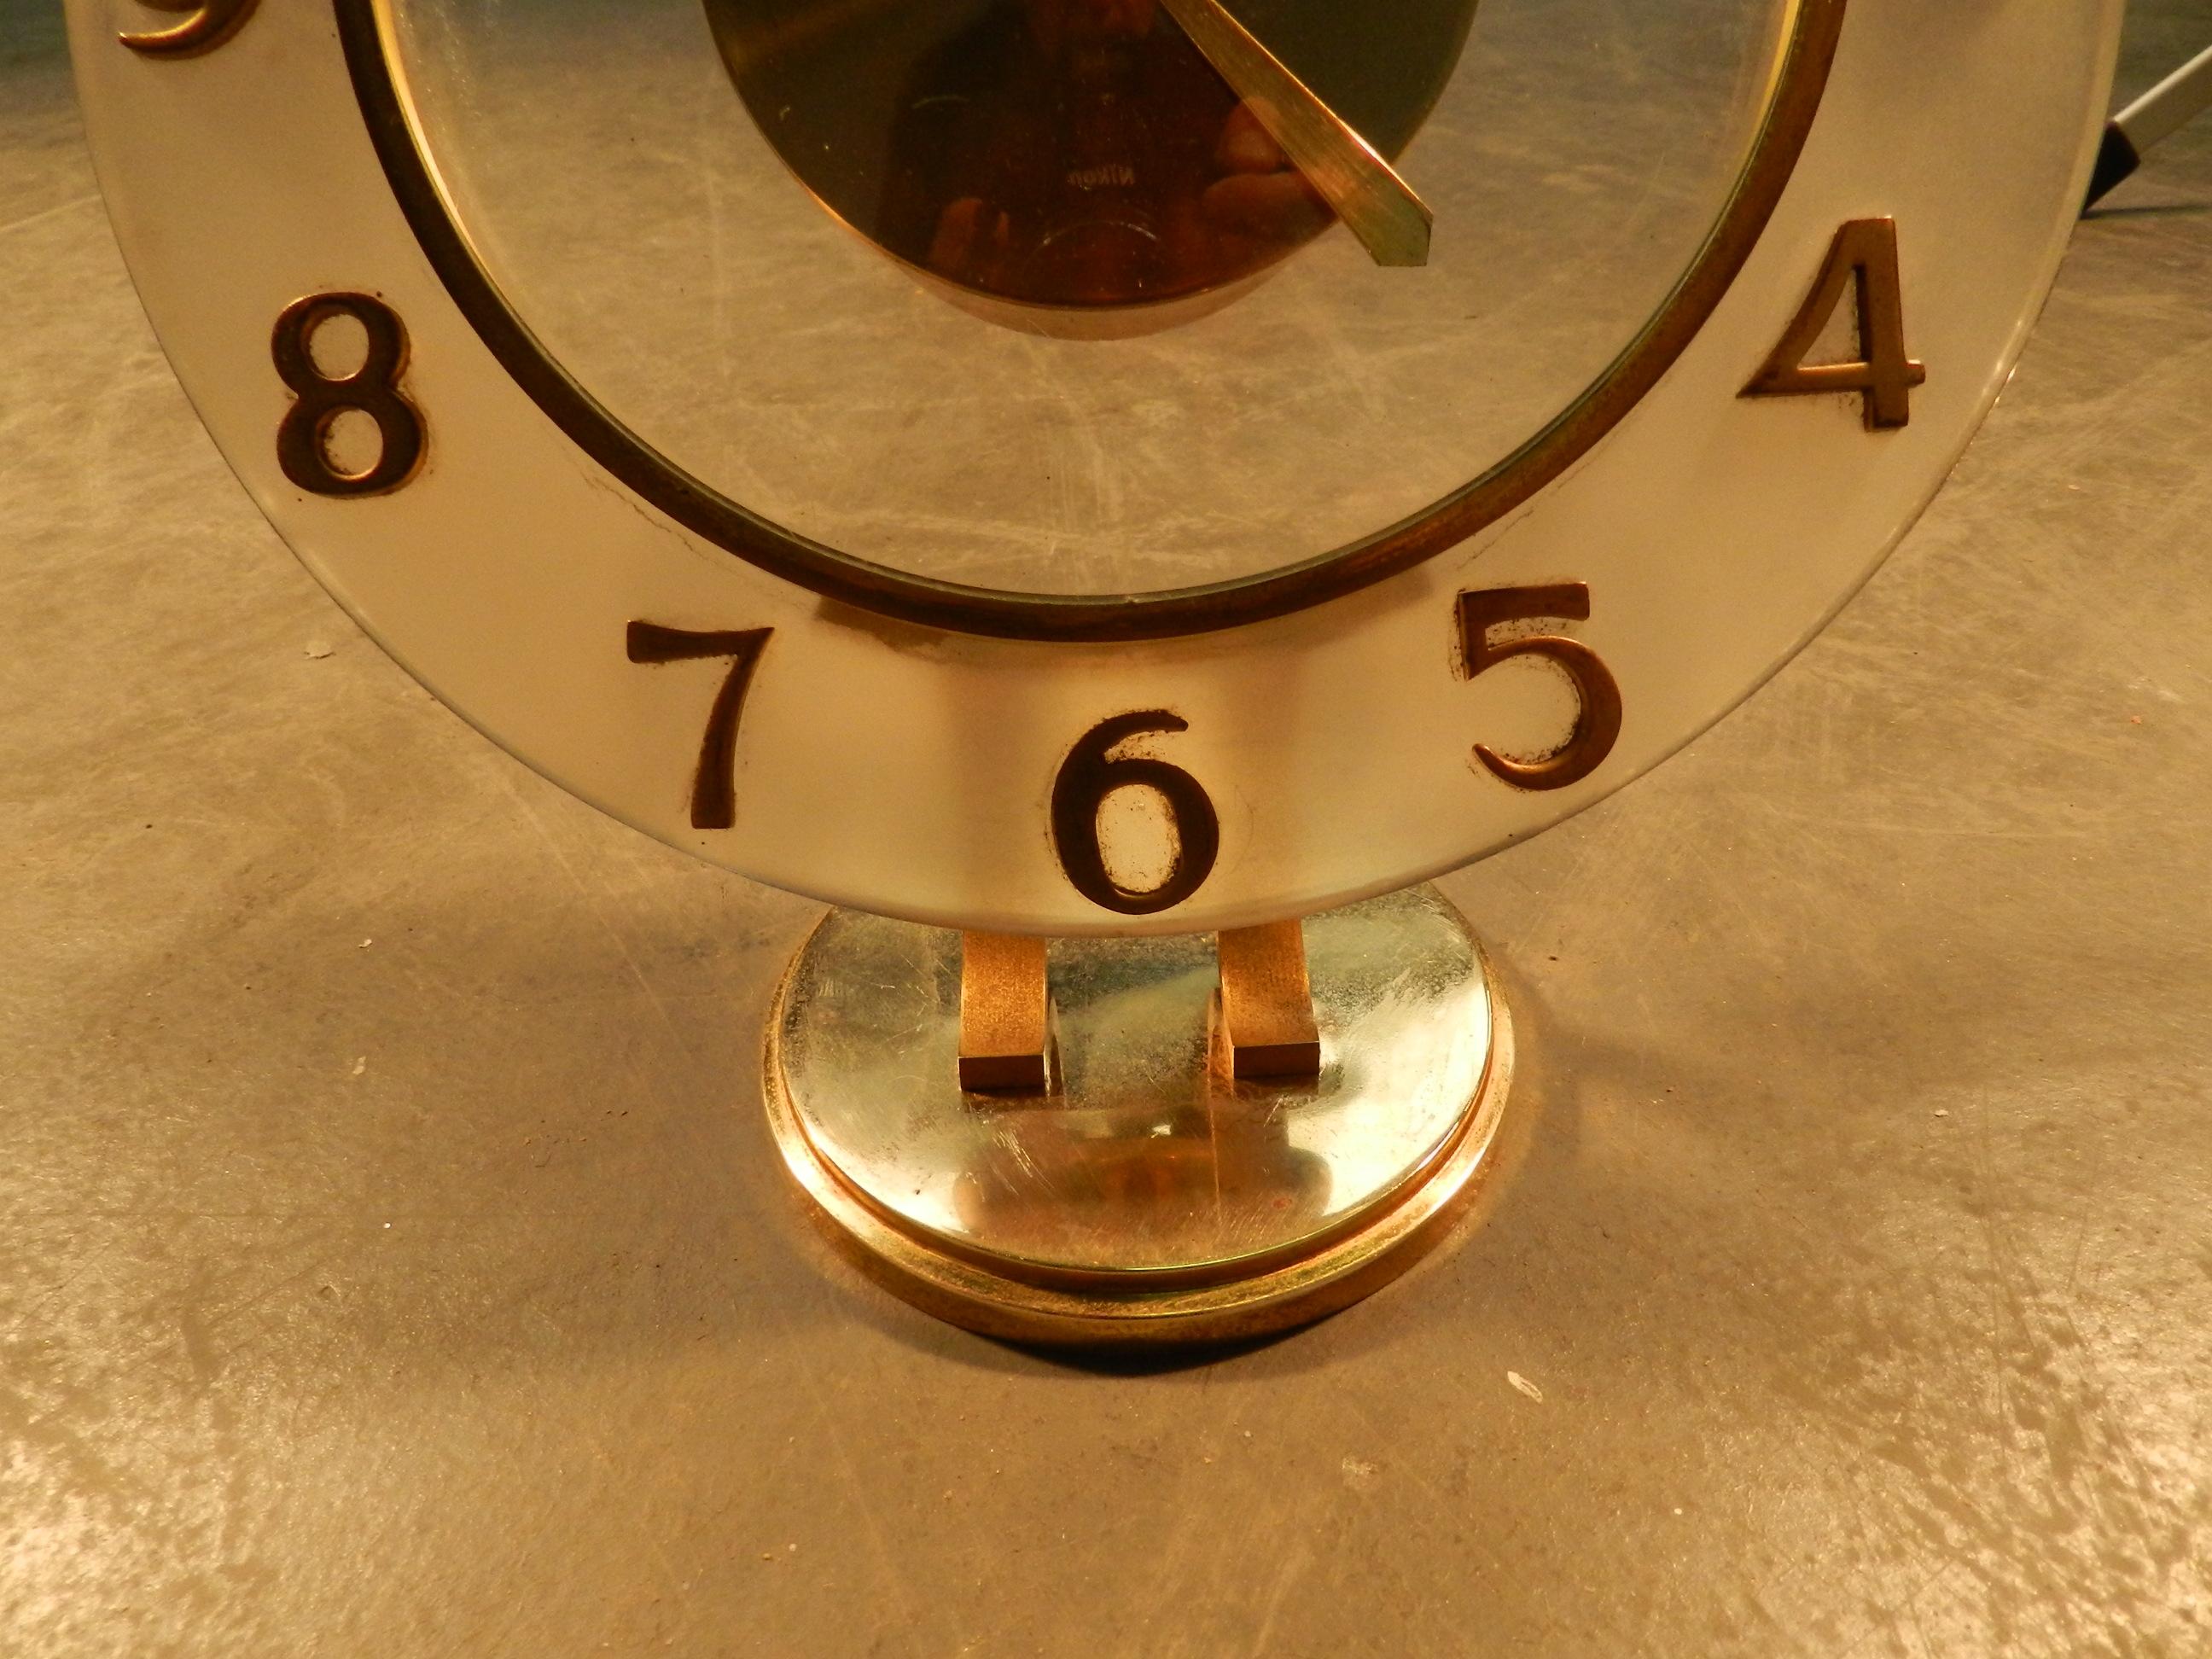 Brass art deco table clock, Bayard brand, works. For Sale